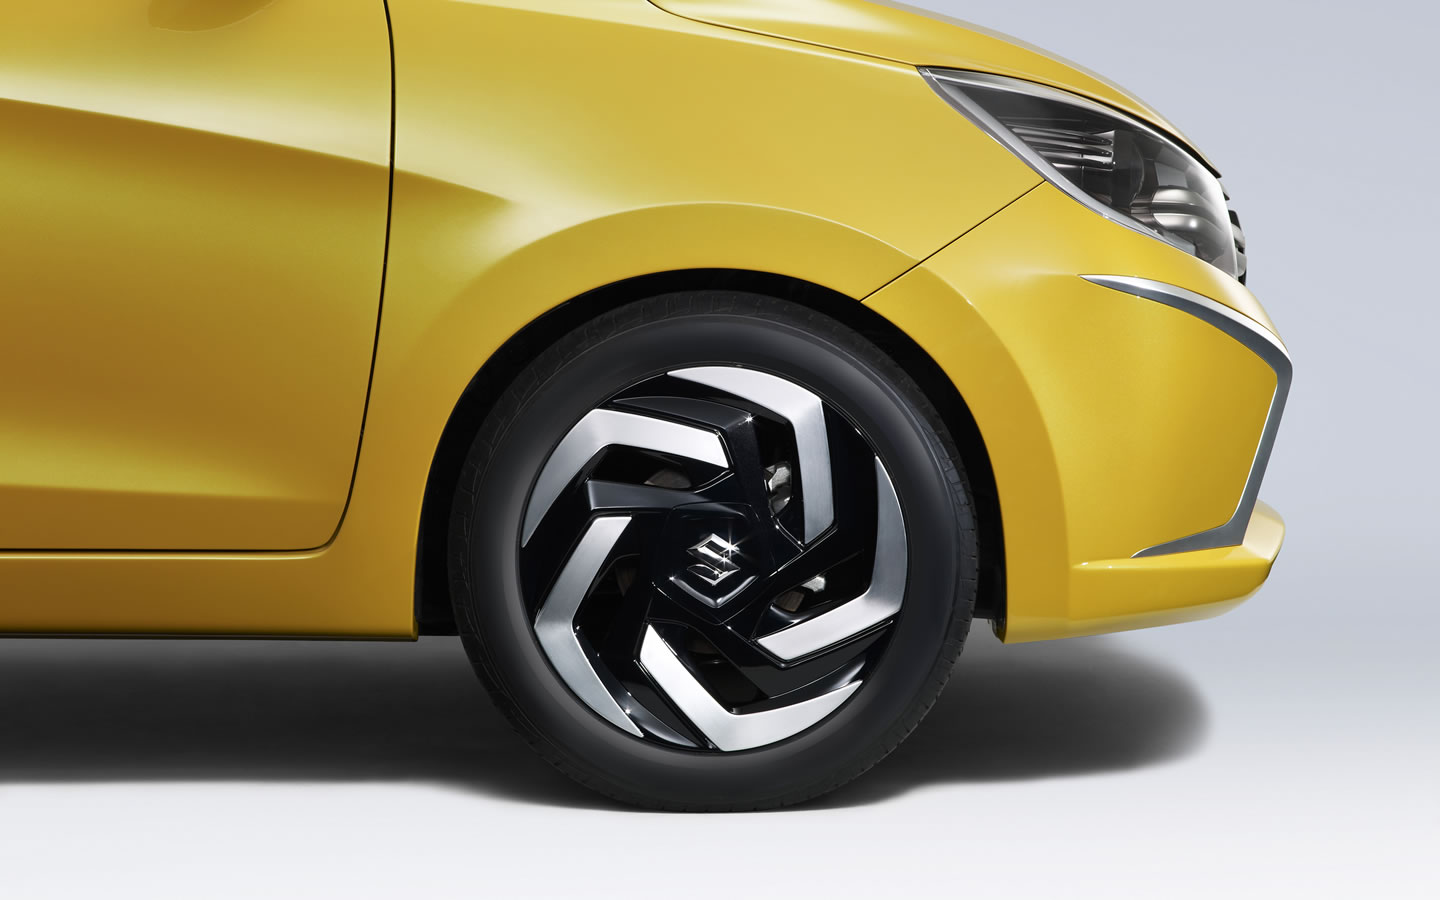 Mobil Konsep, Velg dengan diameter besar pada Suzuki A-wind Concept: Konsep Suzuki A-Wind Sekilas Mirip Agya Ya